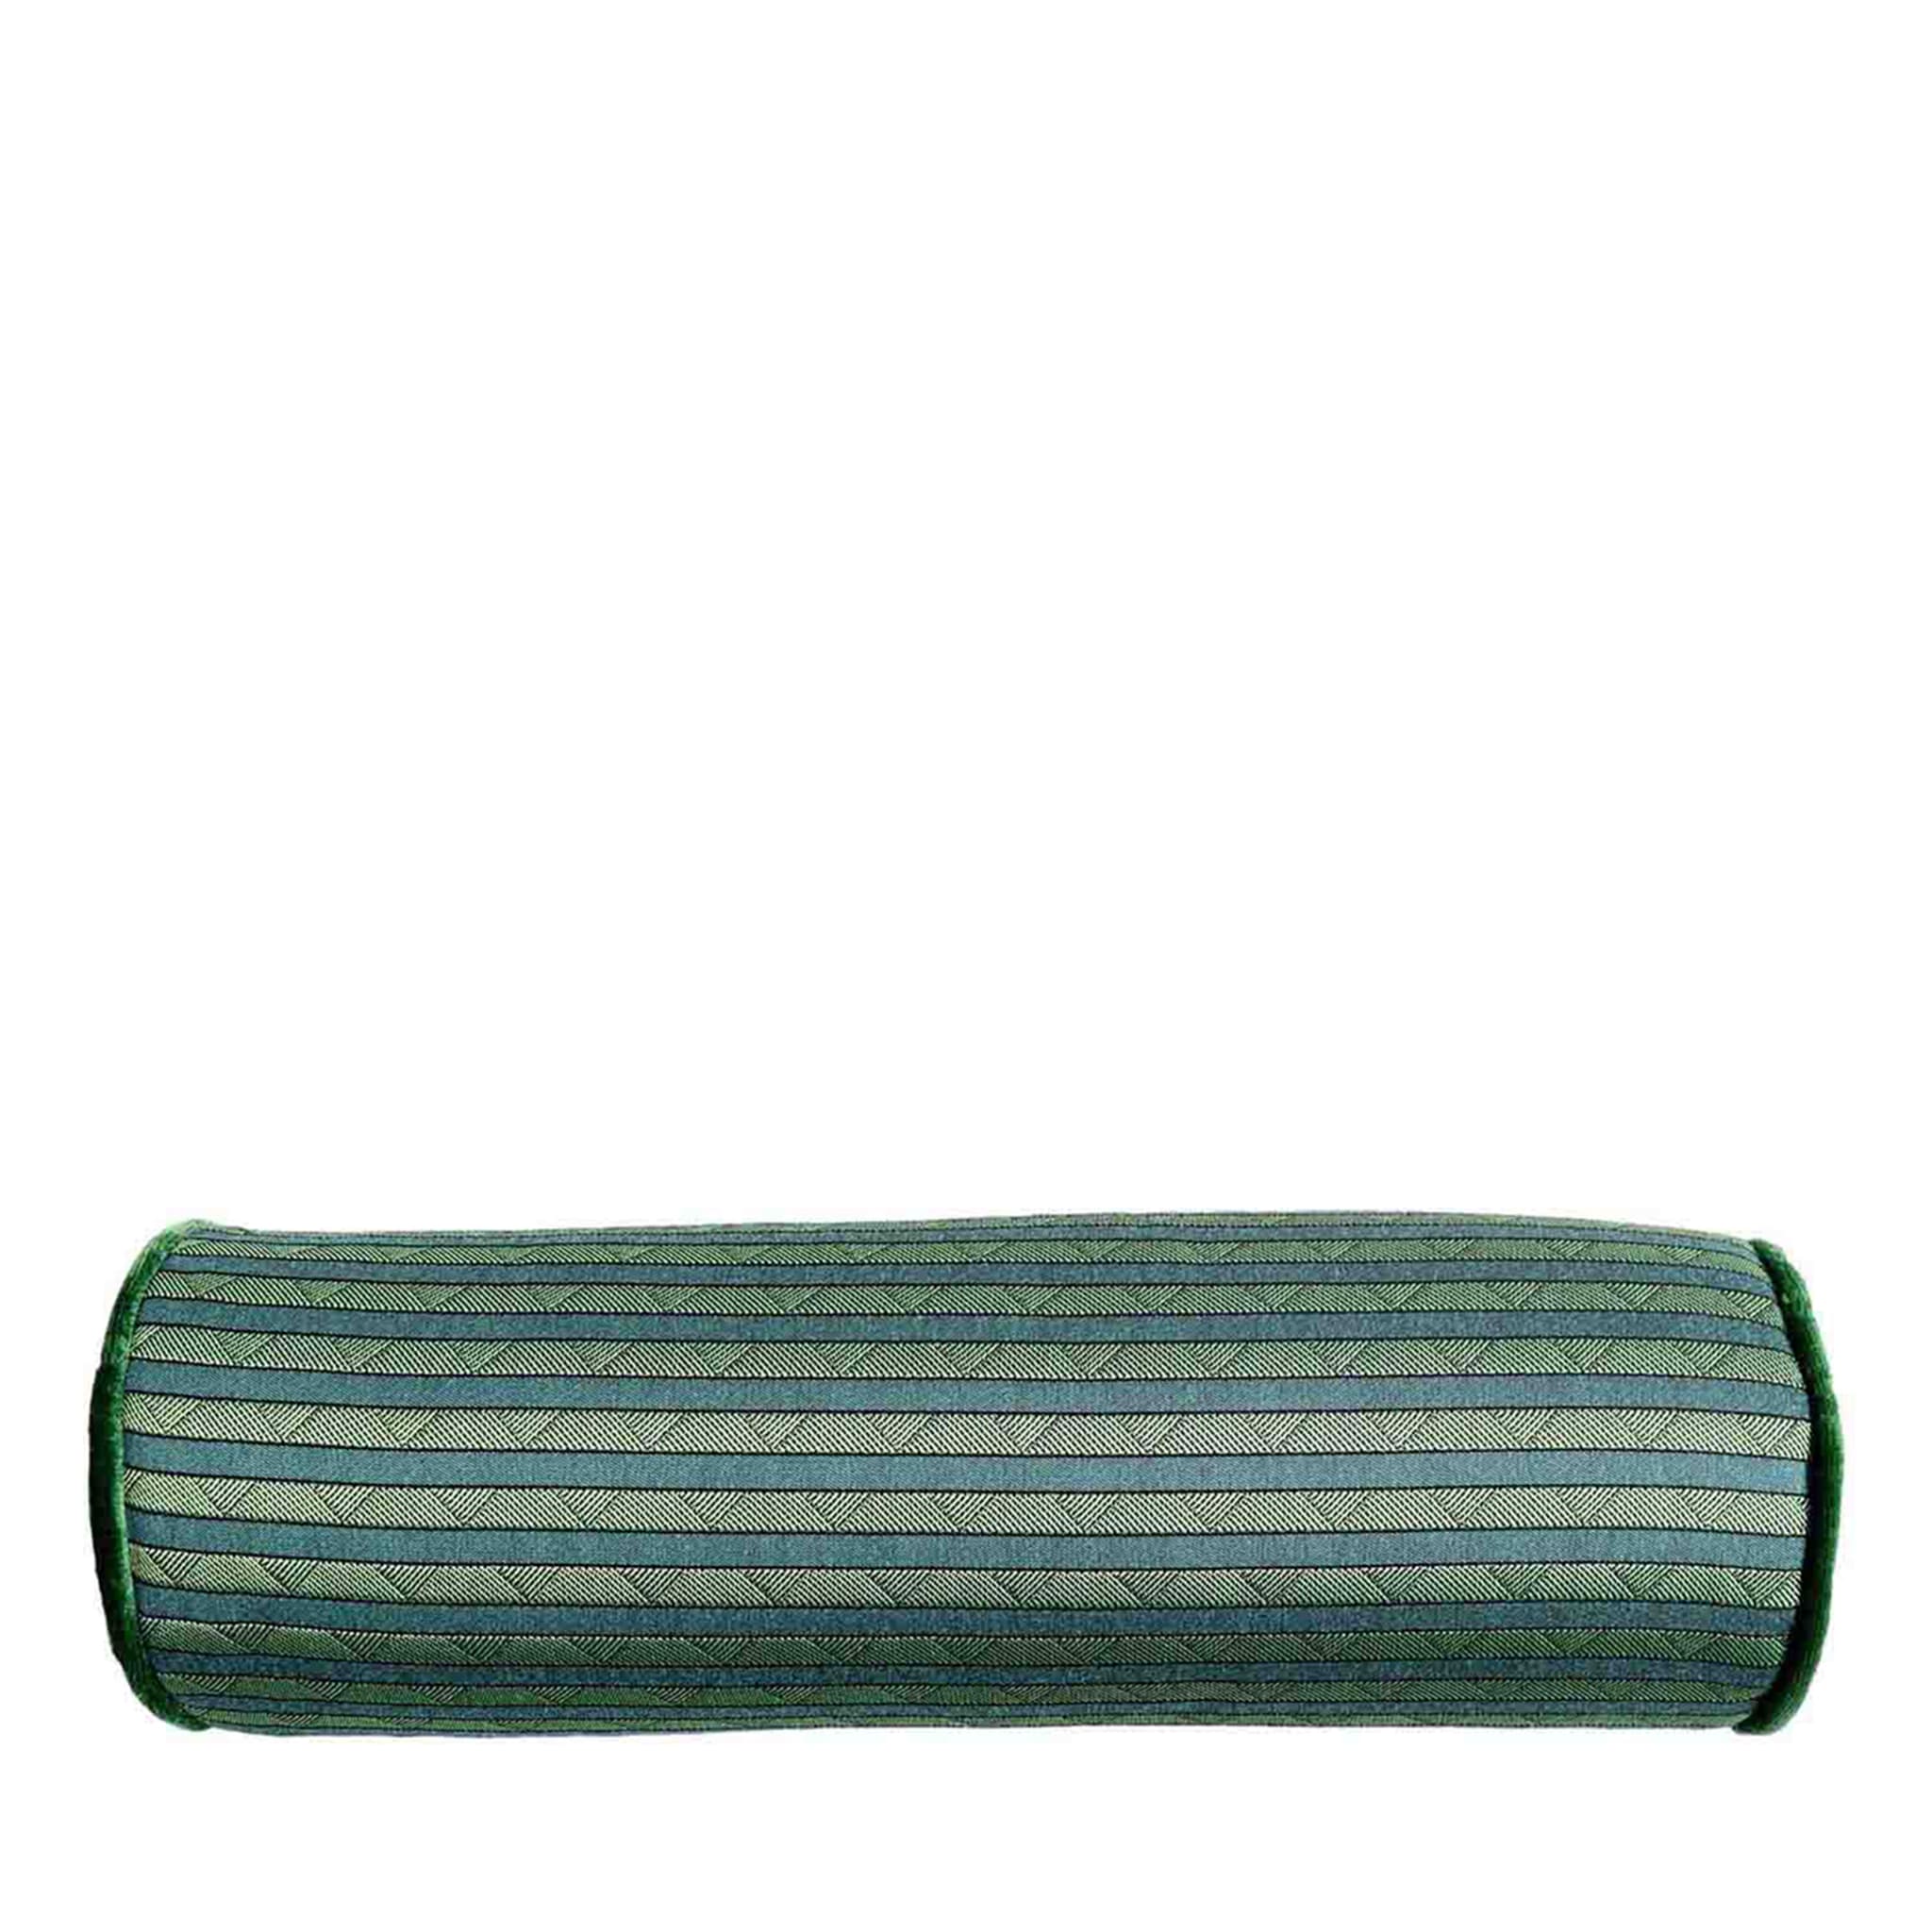 Emerald Roll Rullo Cushion - Main view